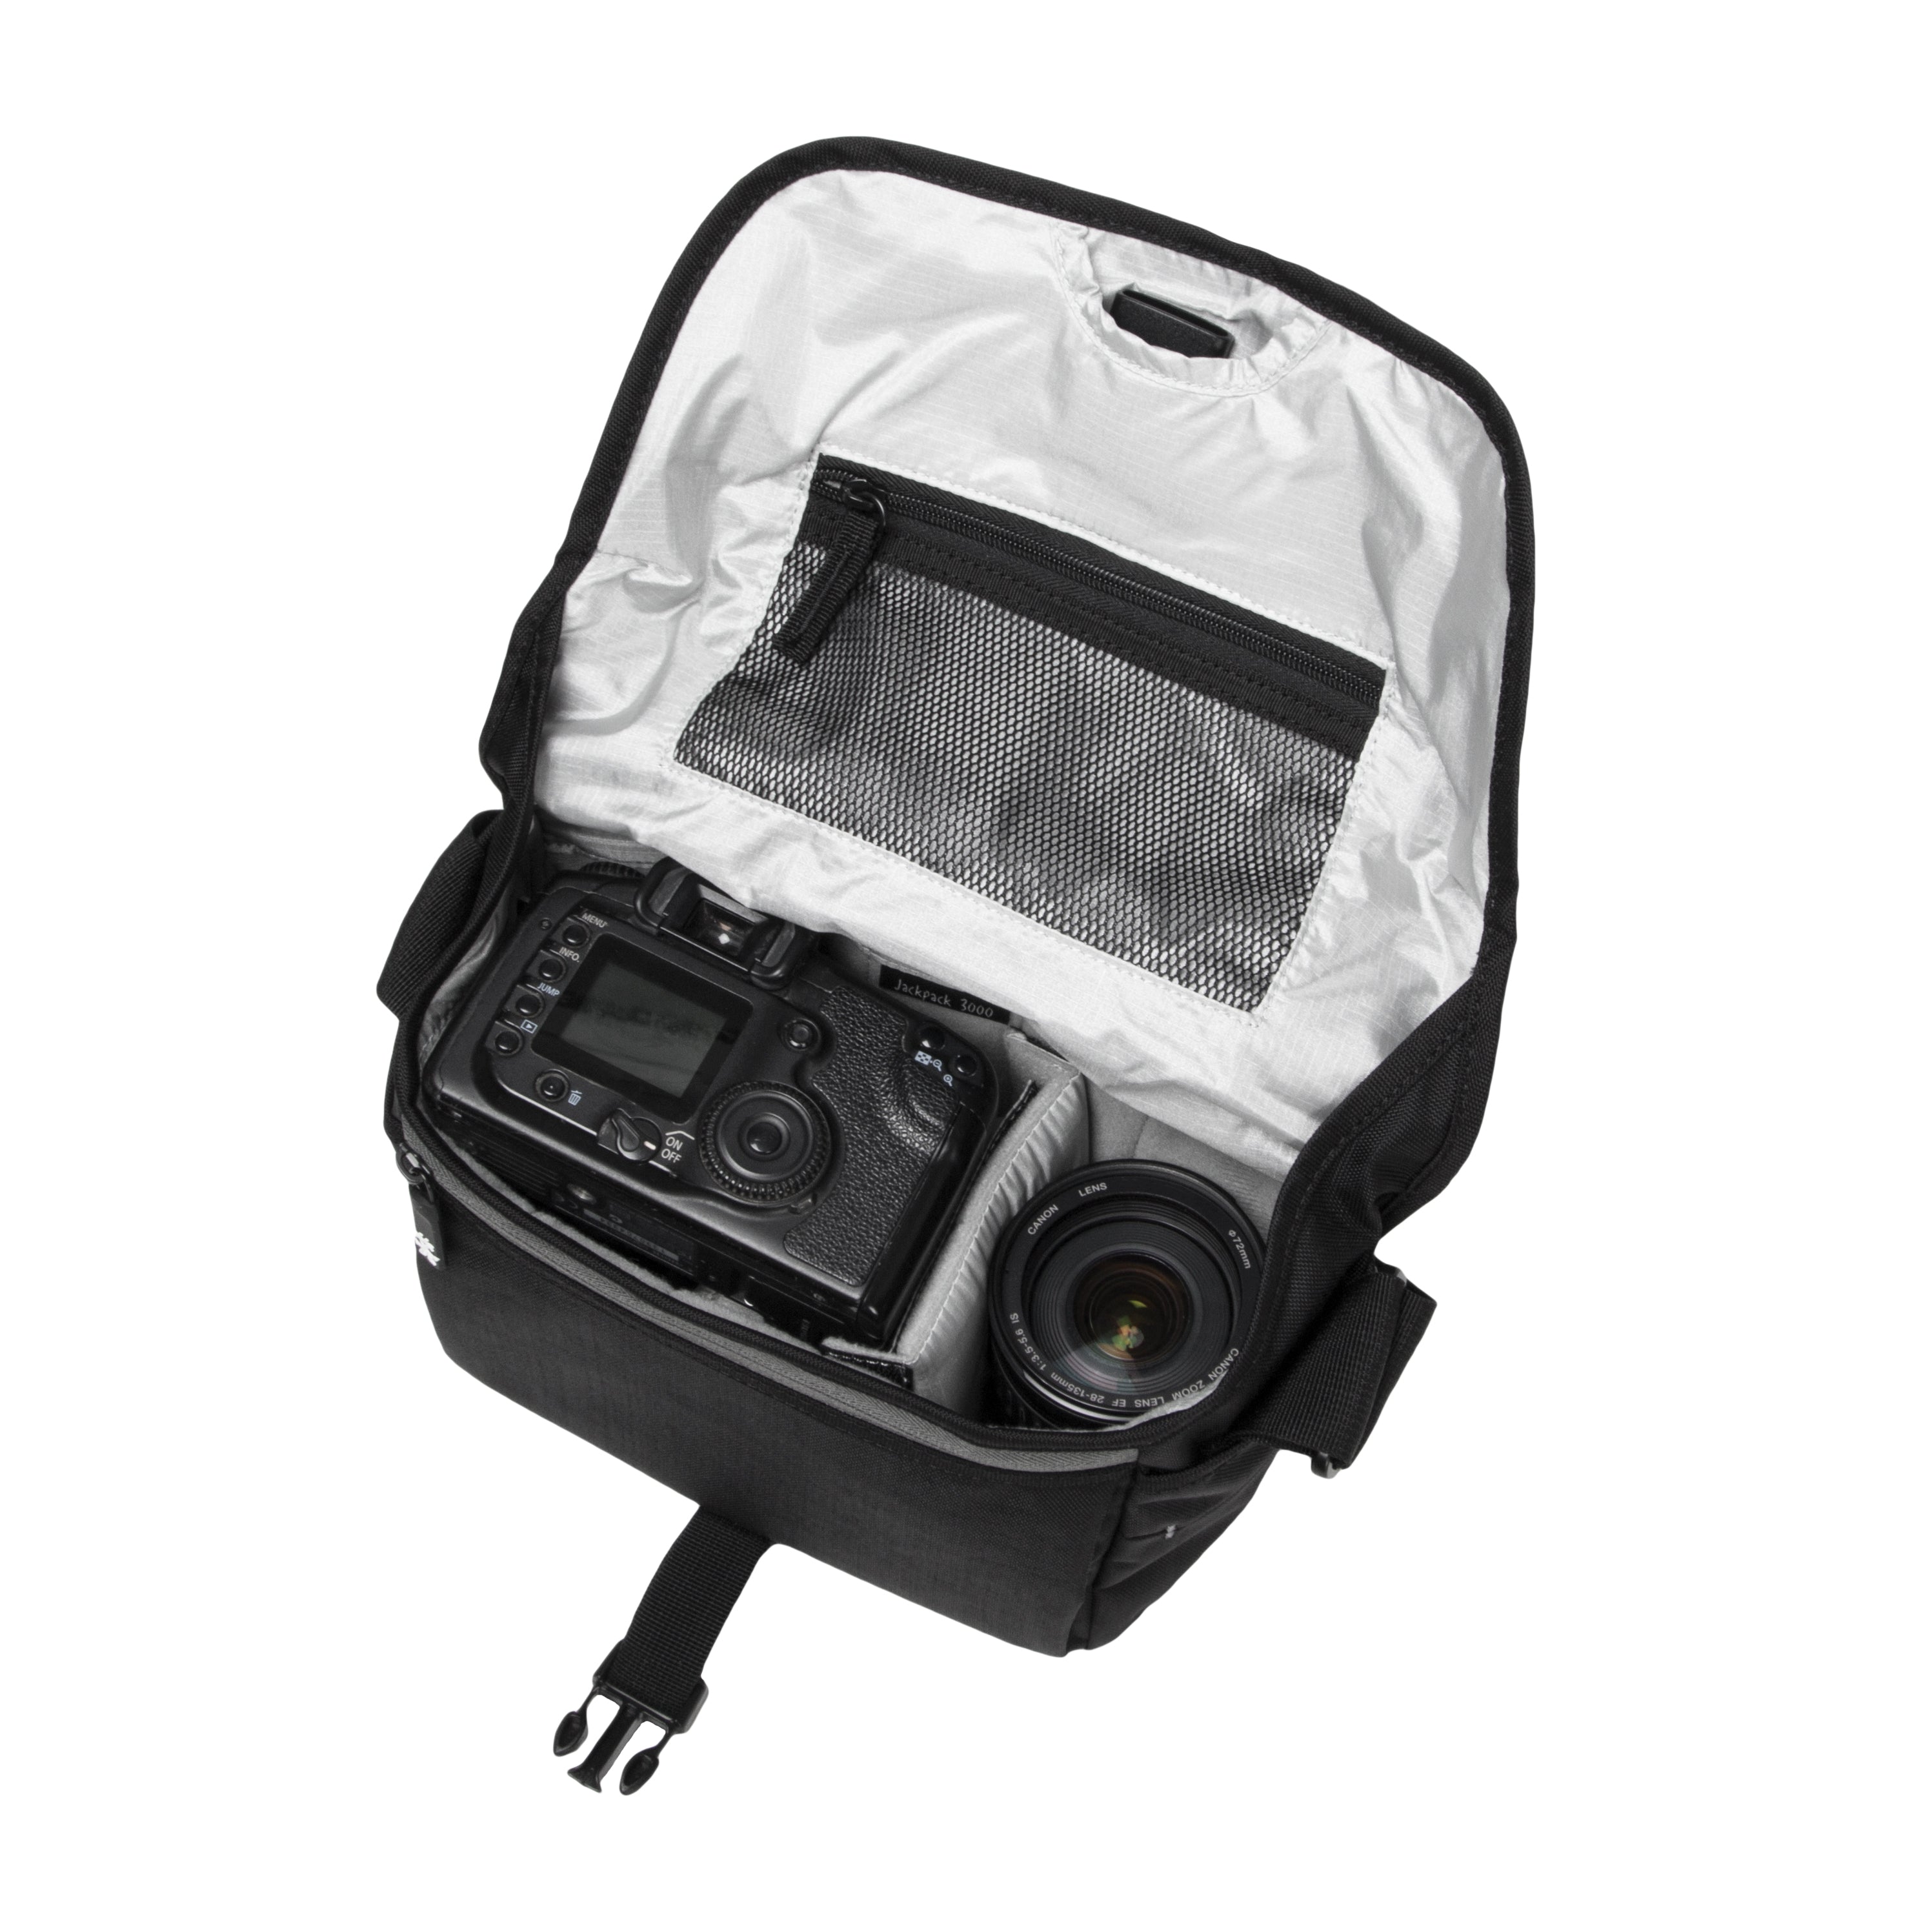 Jackpack 3000 camera bag